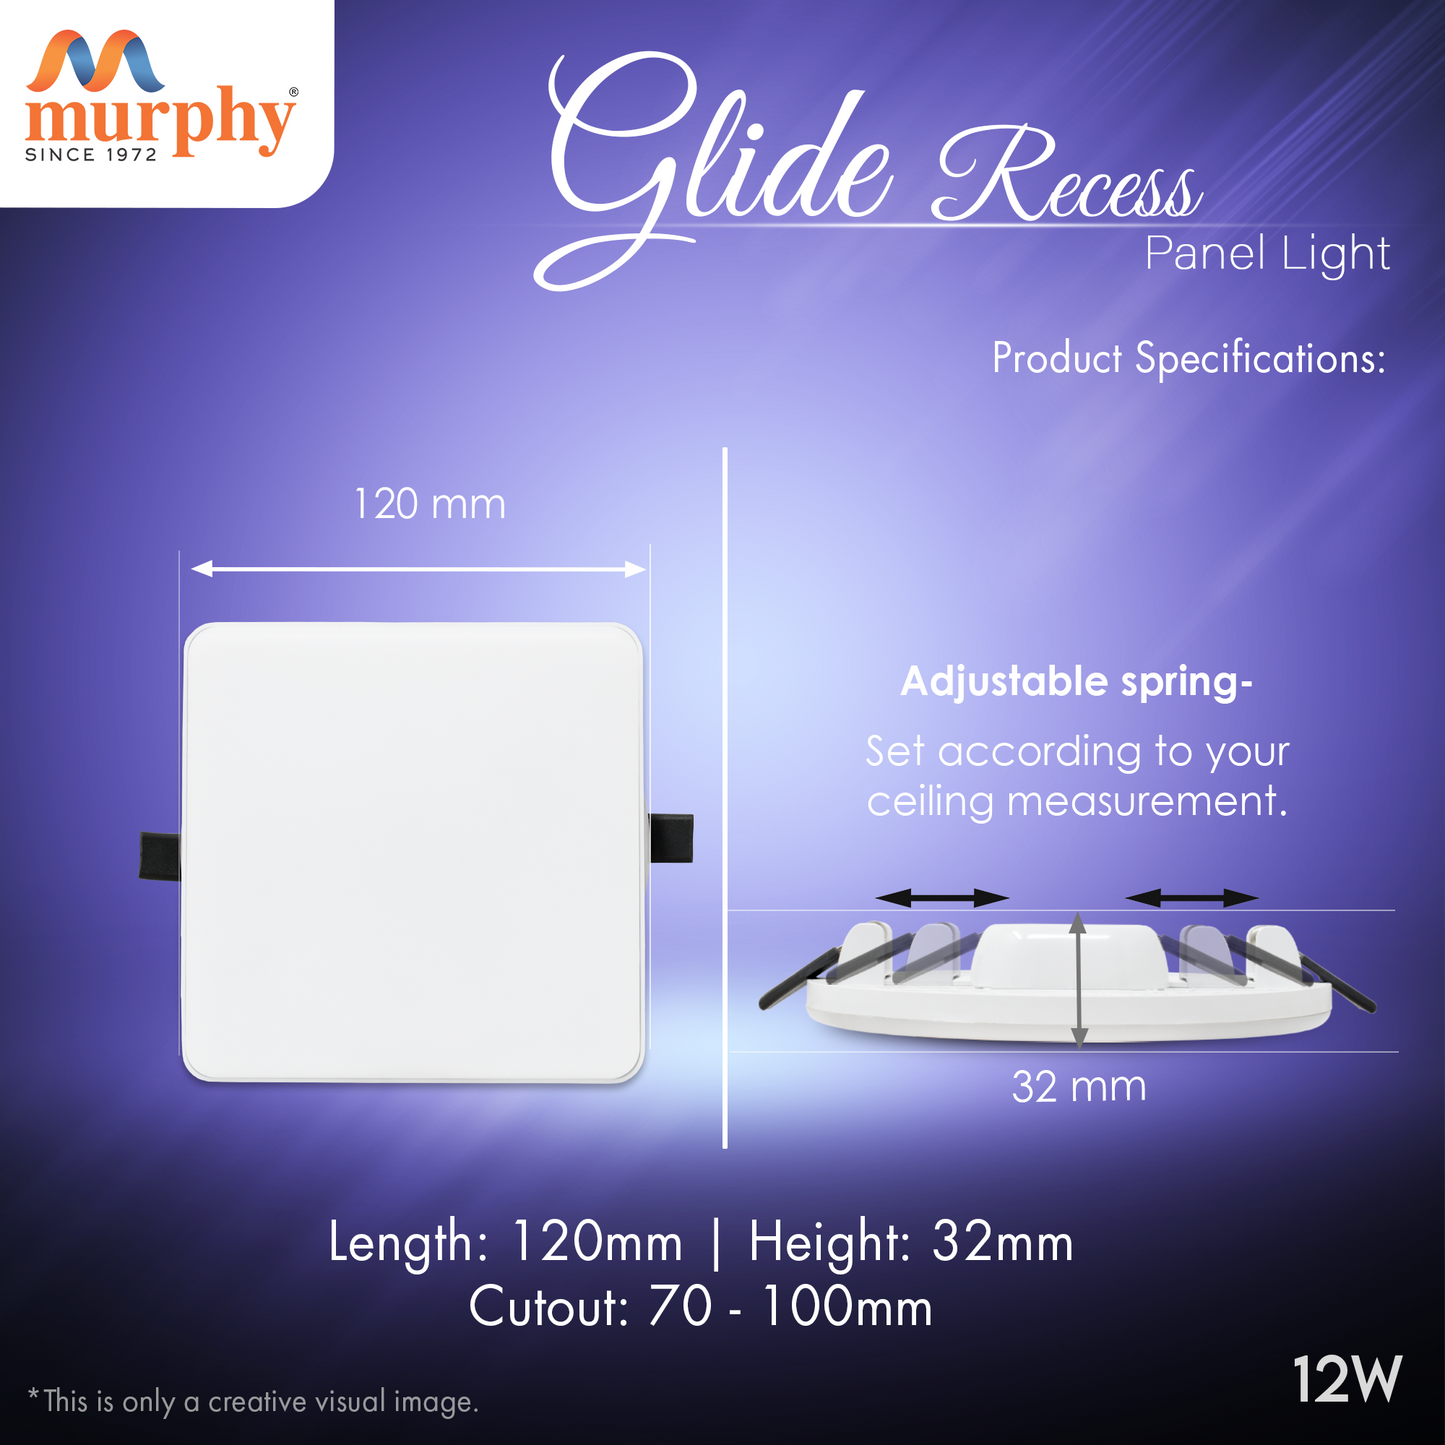 Murphy 12W Glide Square Recess Slider Panel Light